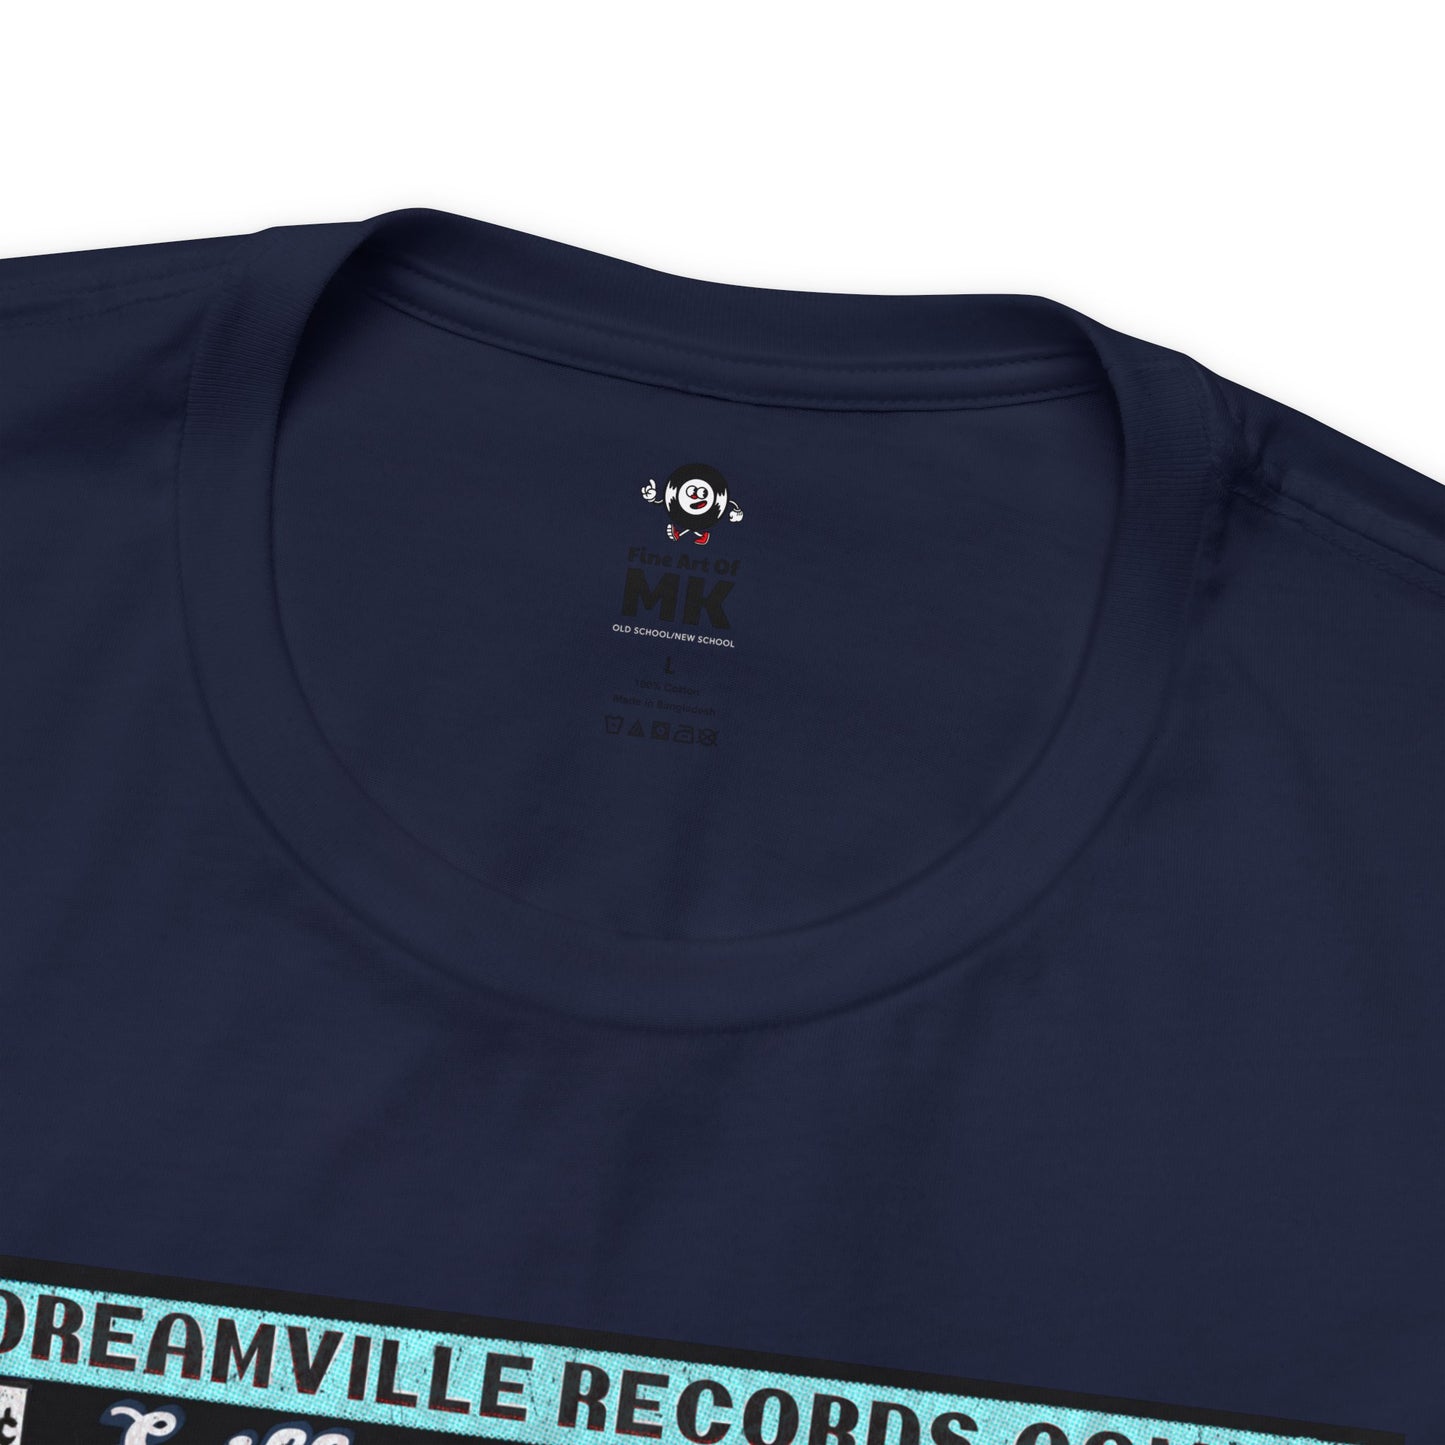 JID - Dicaprio 2 - Unisex Jersey T-Shirt